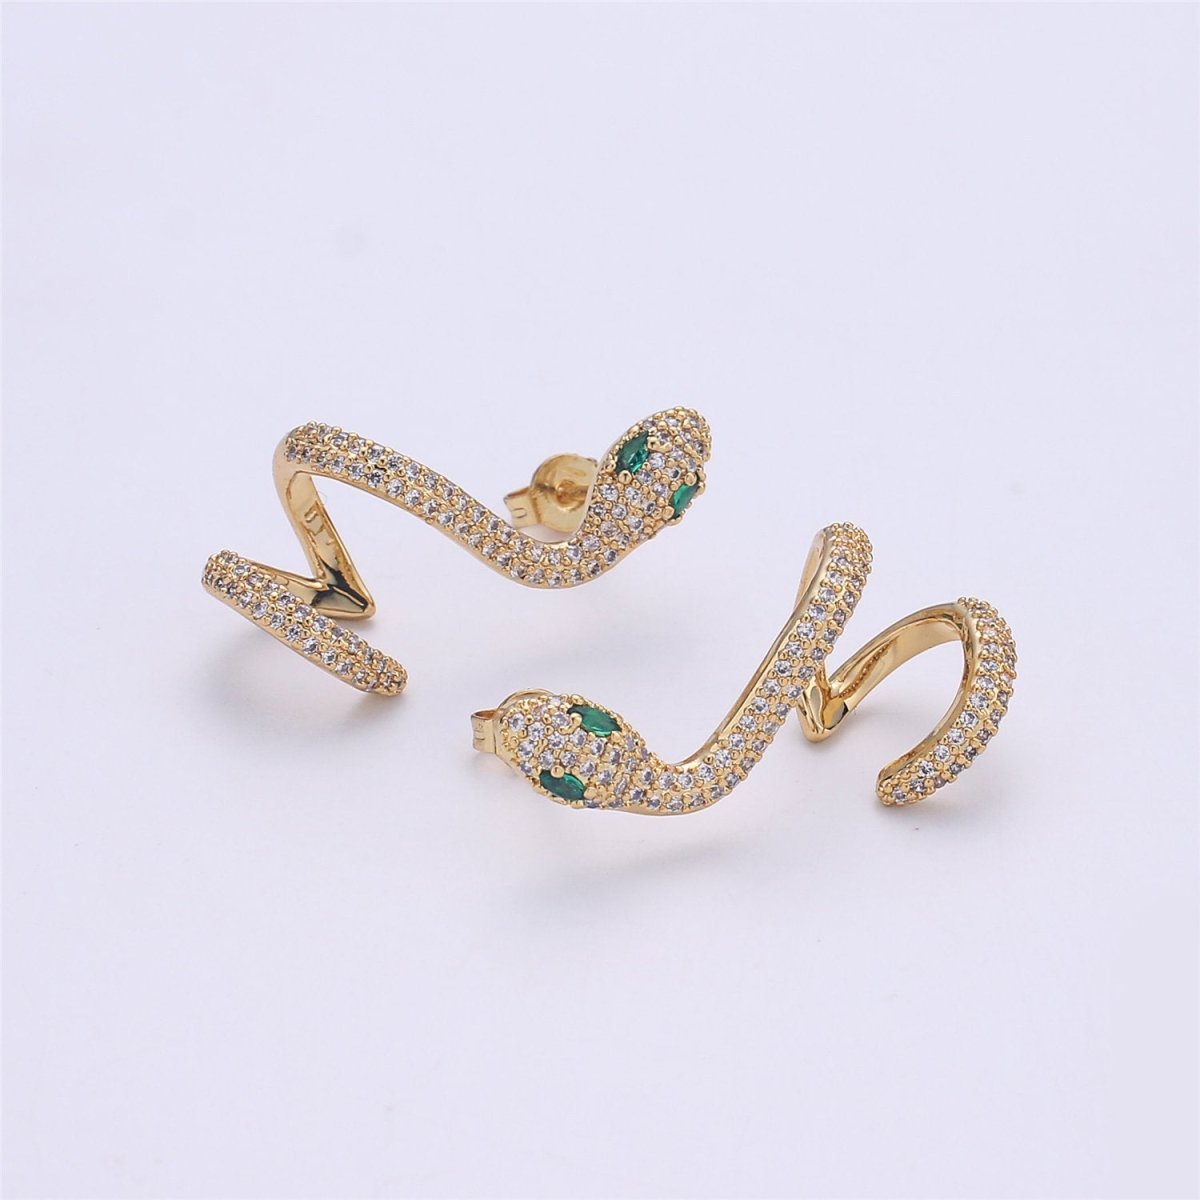 Clearance Snake earrings, snake stud earrings, dainty earrings, gold snake earrings, delicate studs, gold earrings, trendy earrings, minimal earrings | K-412 - DLUXCA